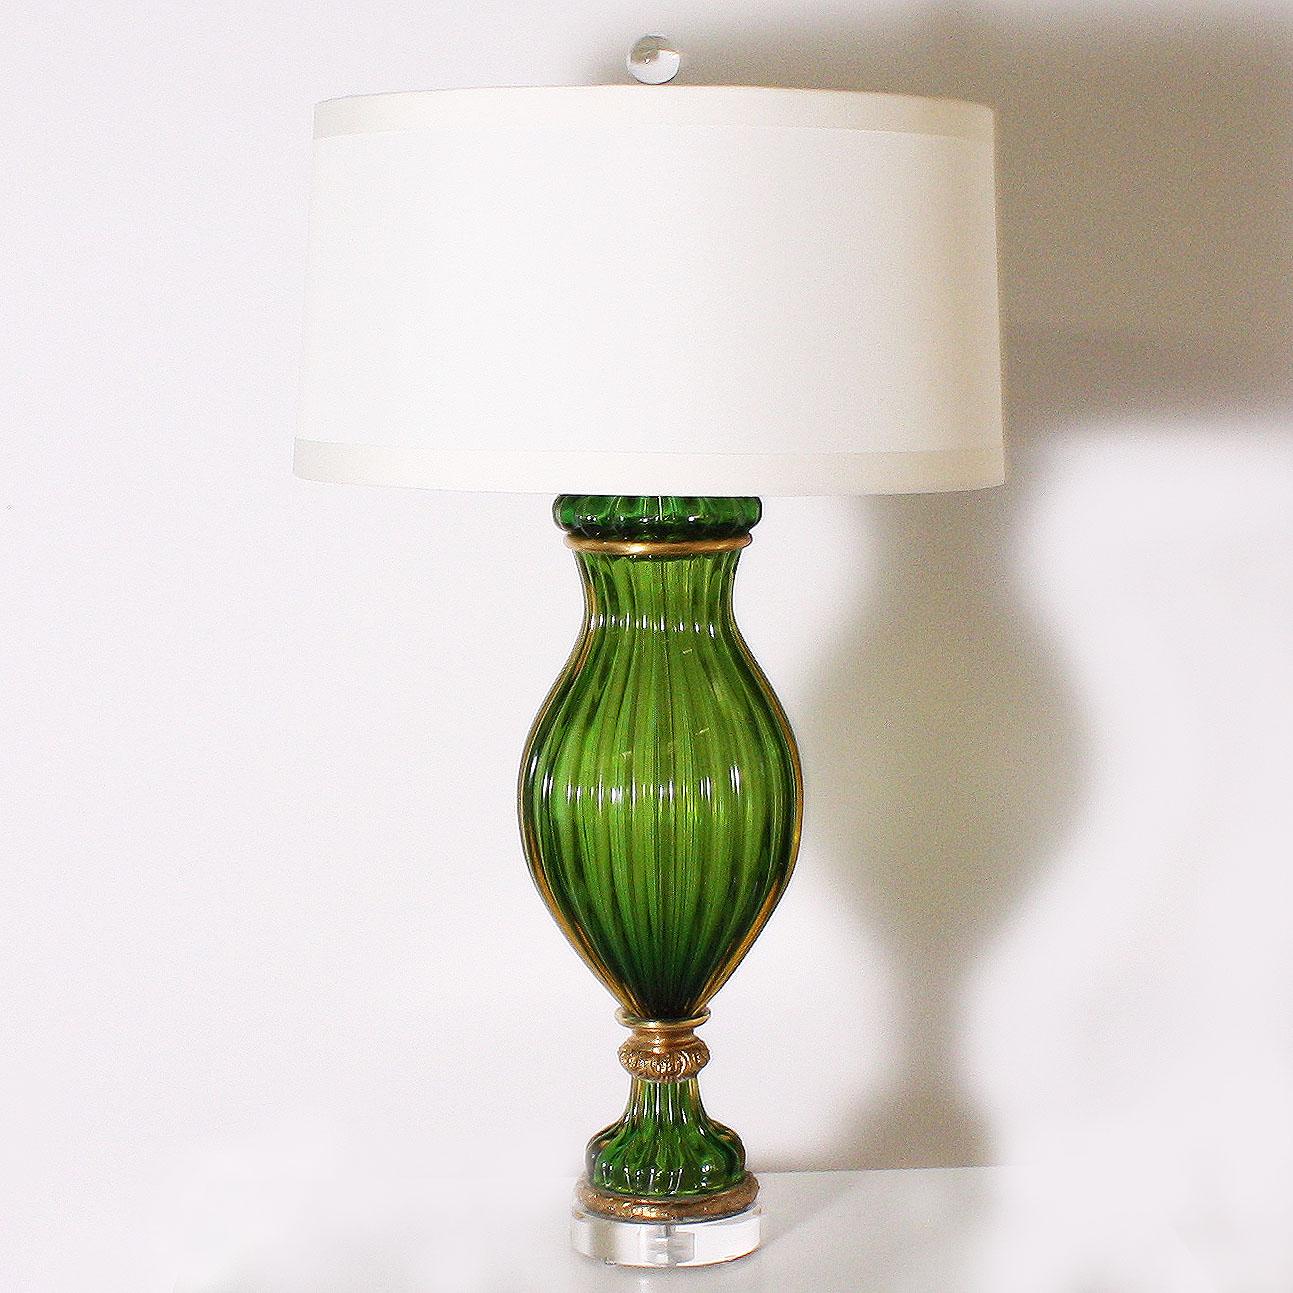 Green Marbro Murano glass lamp by Seguso, circa 1960
Measures: 20” diameter X 33” height.